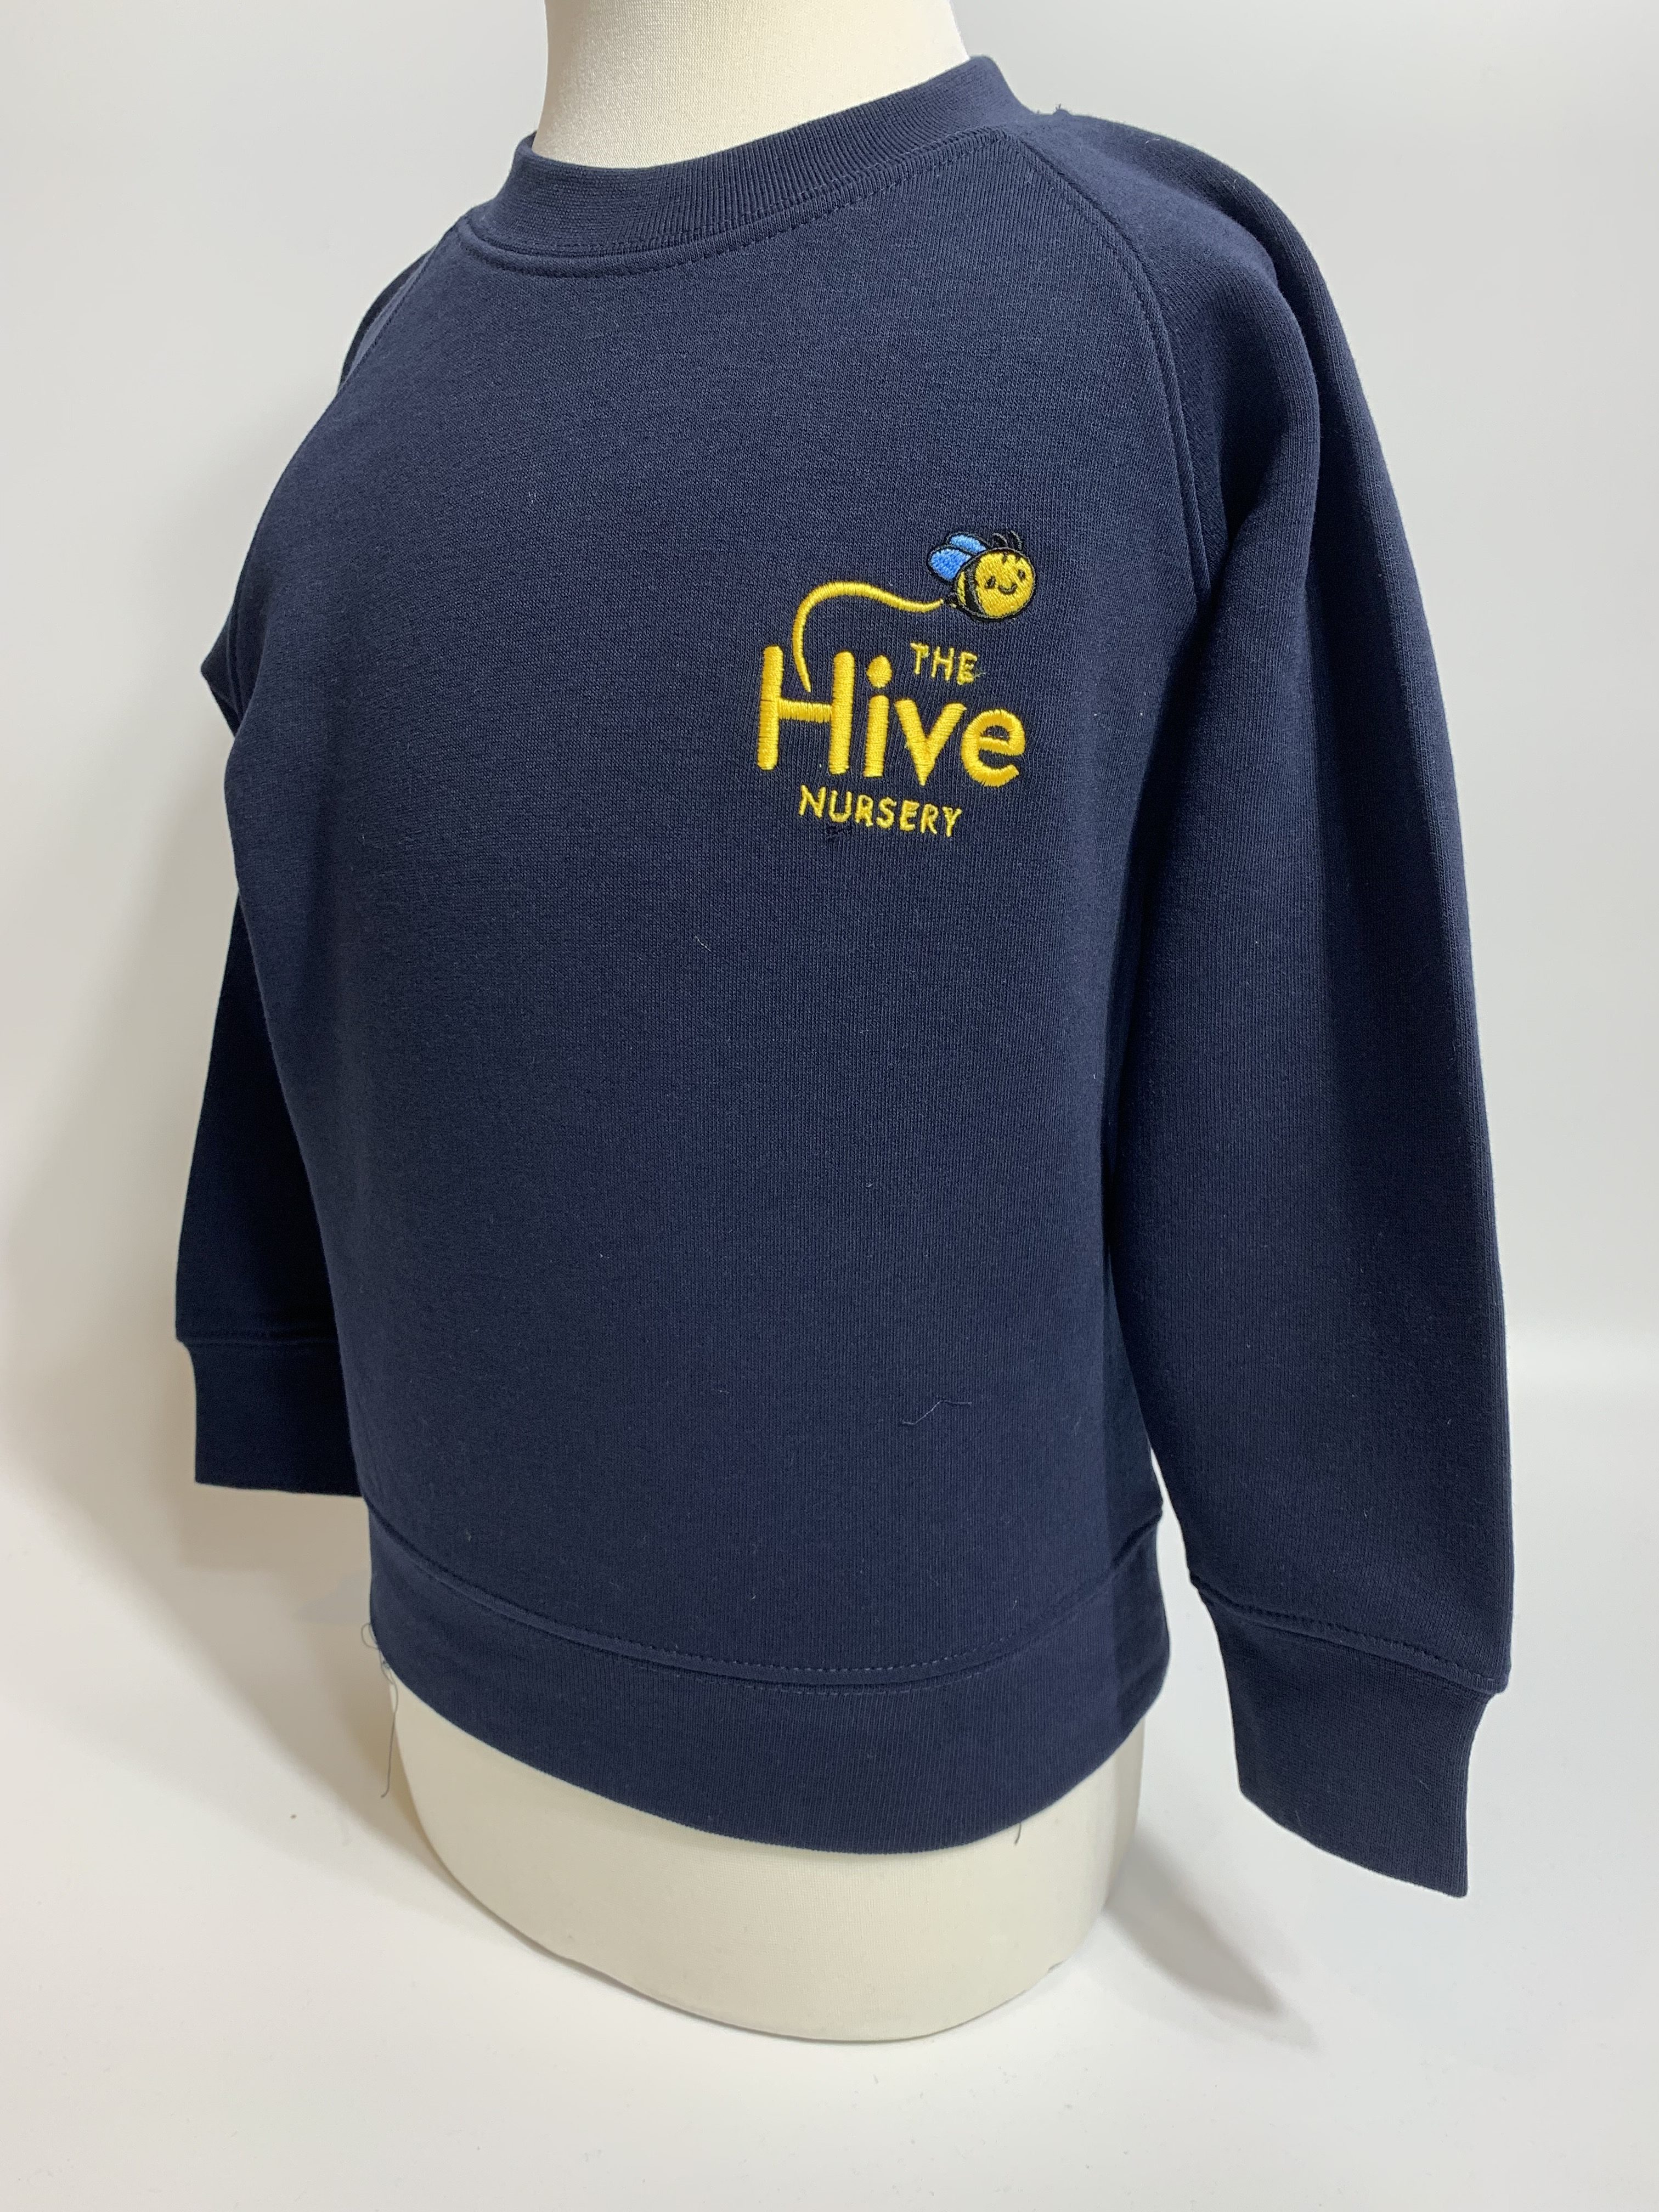 Hive Nursery Navy Sweatshirt - 2-3 (22")